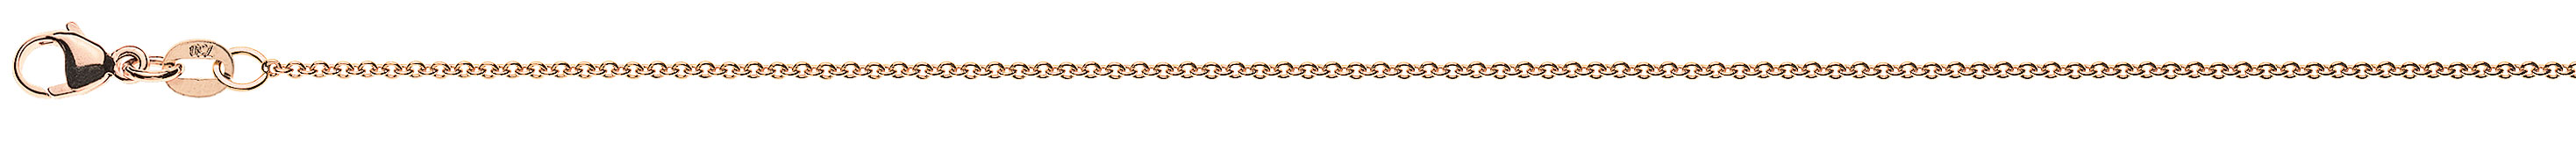 AURONOS Prestige Necklace Rose Gold 18K Round Anchor 40cm 1.3mm